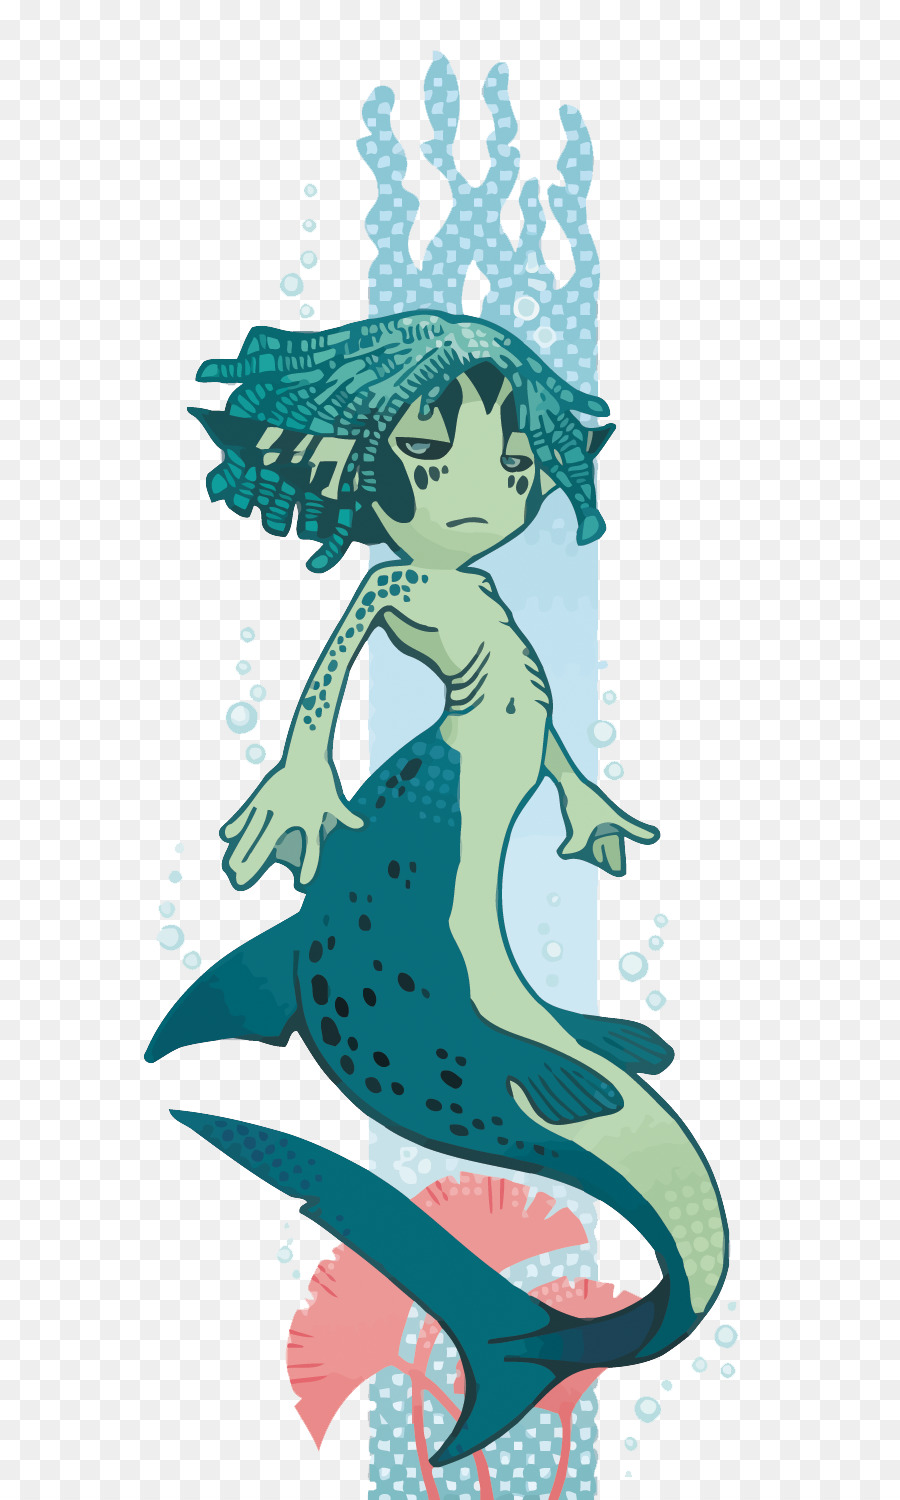 The Little Mermaid Cartoon Visual arts Illustration - Vector shark man png download - 710*1500 - Free Transparent Little Mermaid png Download.